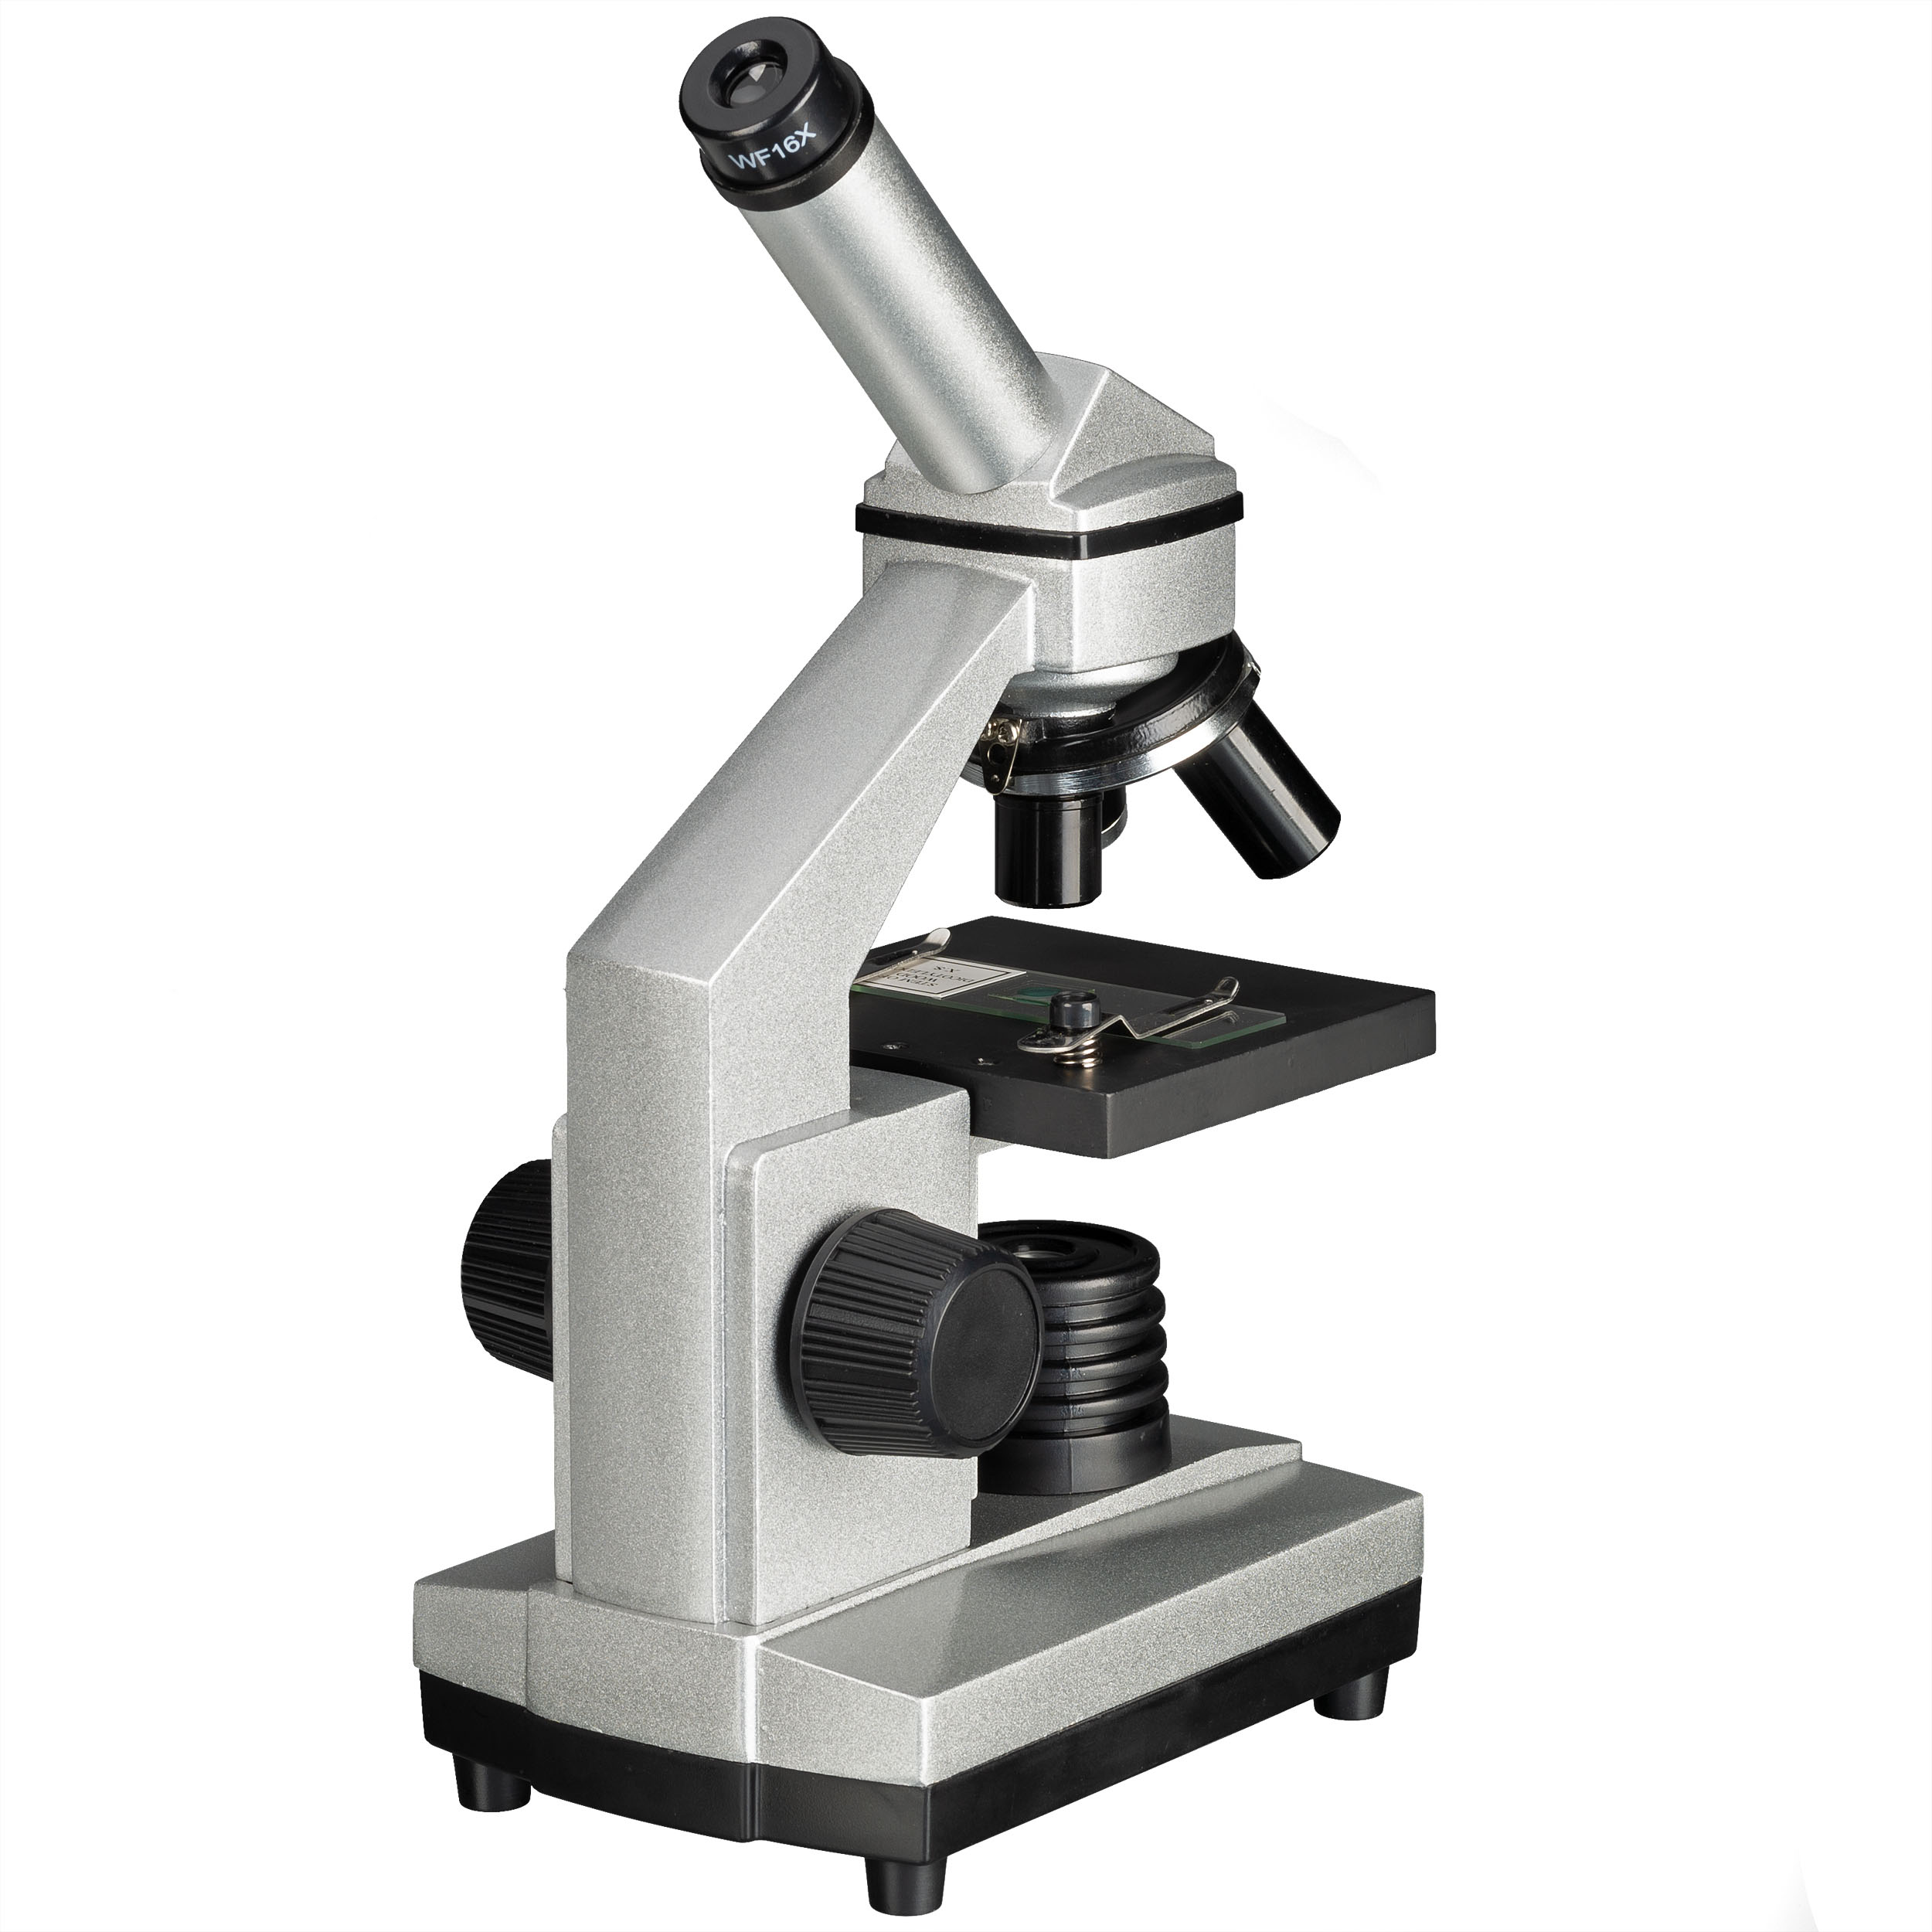 40x-1024x HD-Okularkamera mit BRESSER JUNIOR Mikroskop